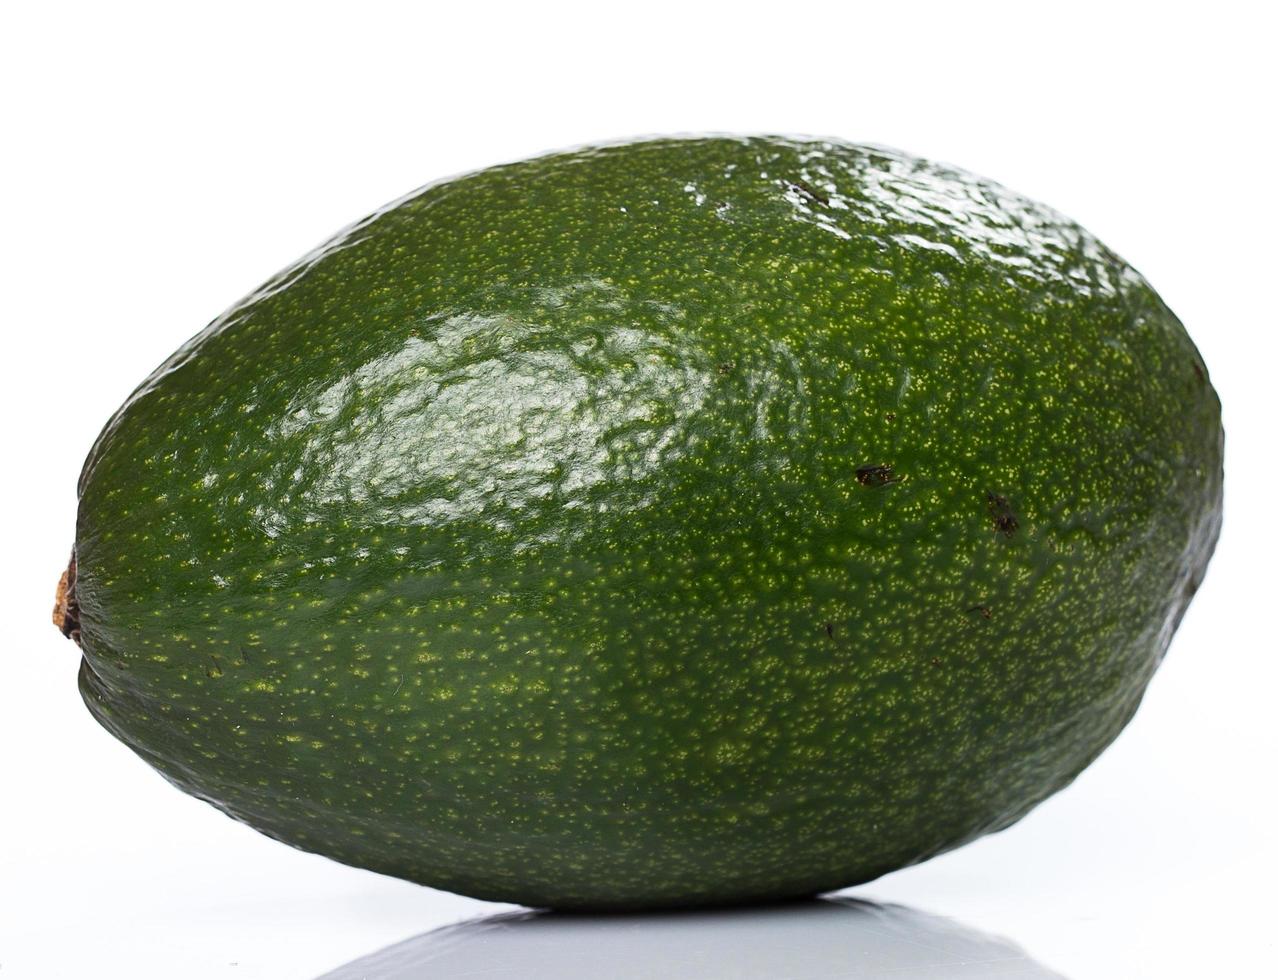 Fresh green avocado photo